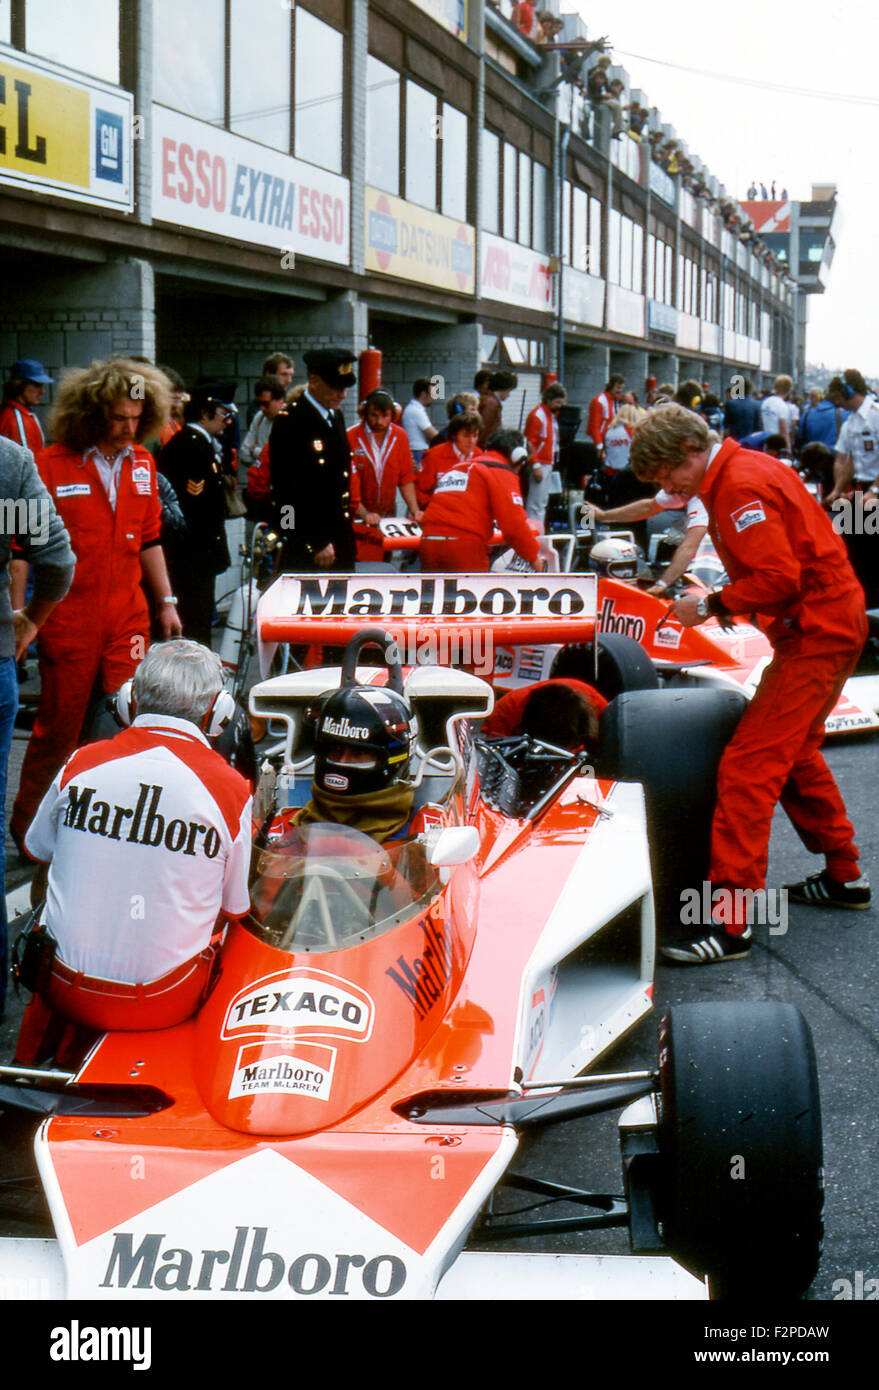 Marlboro 1976 James Jagd Monaco Grand Prix Marlboro Mclaren Formel Eins Auto Rennen Foto 